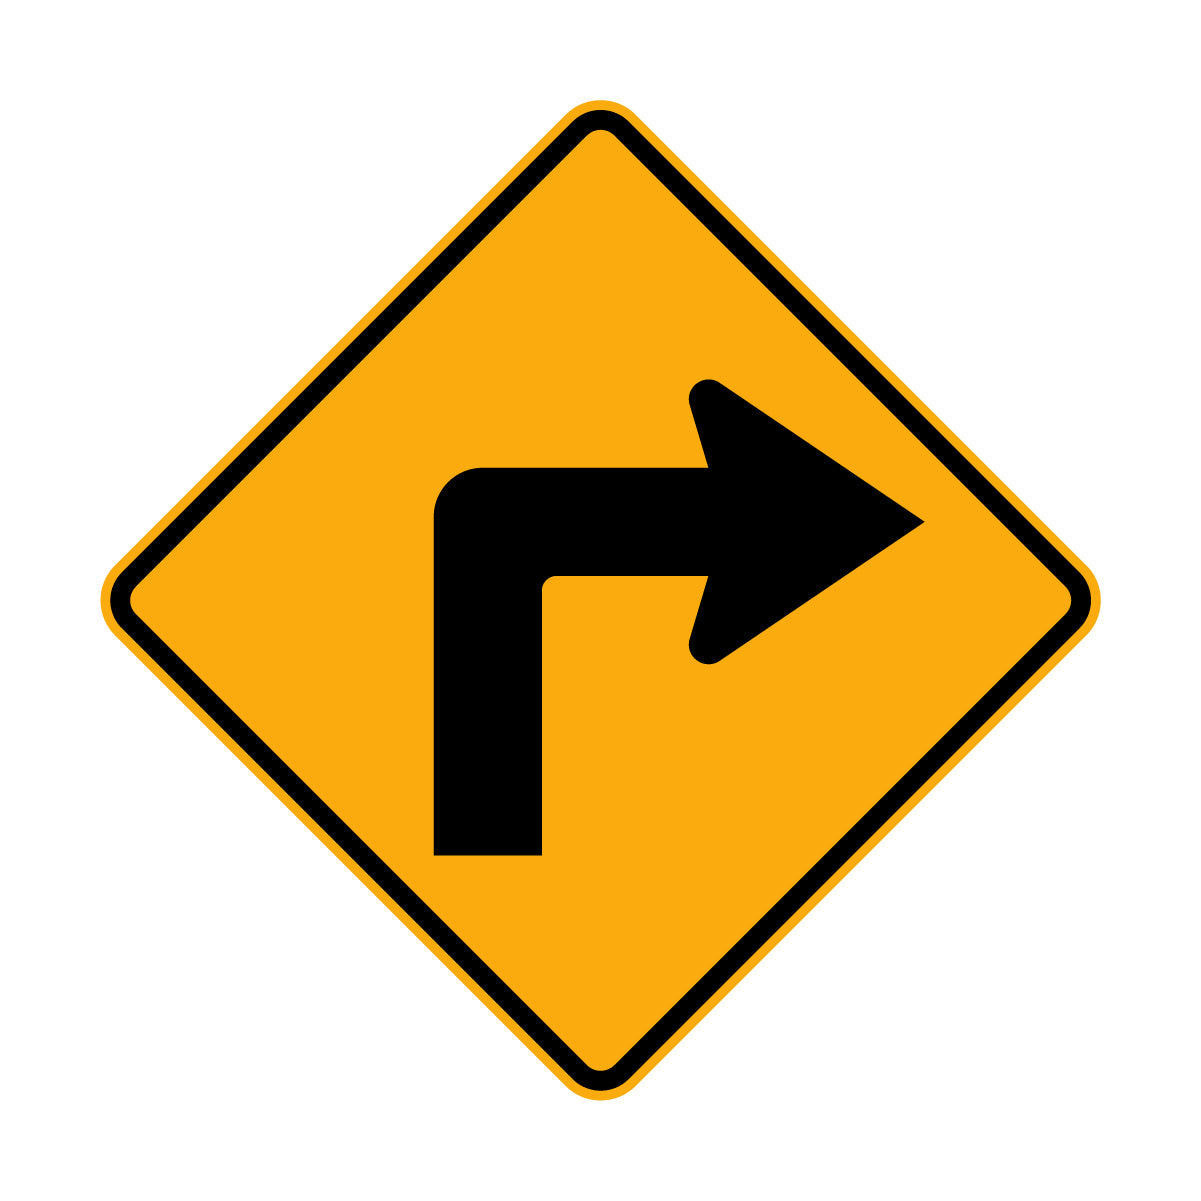 Warning: Arrow Sign